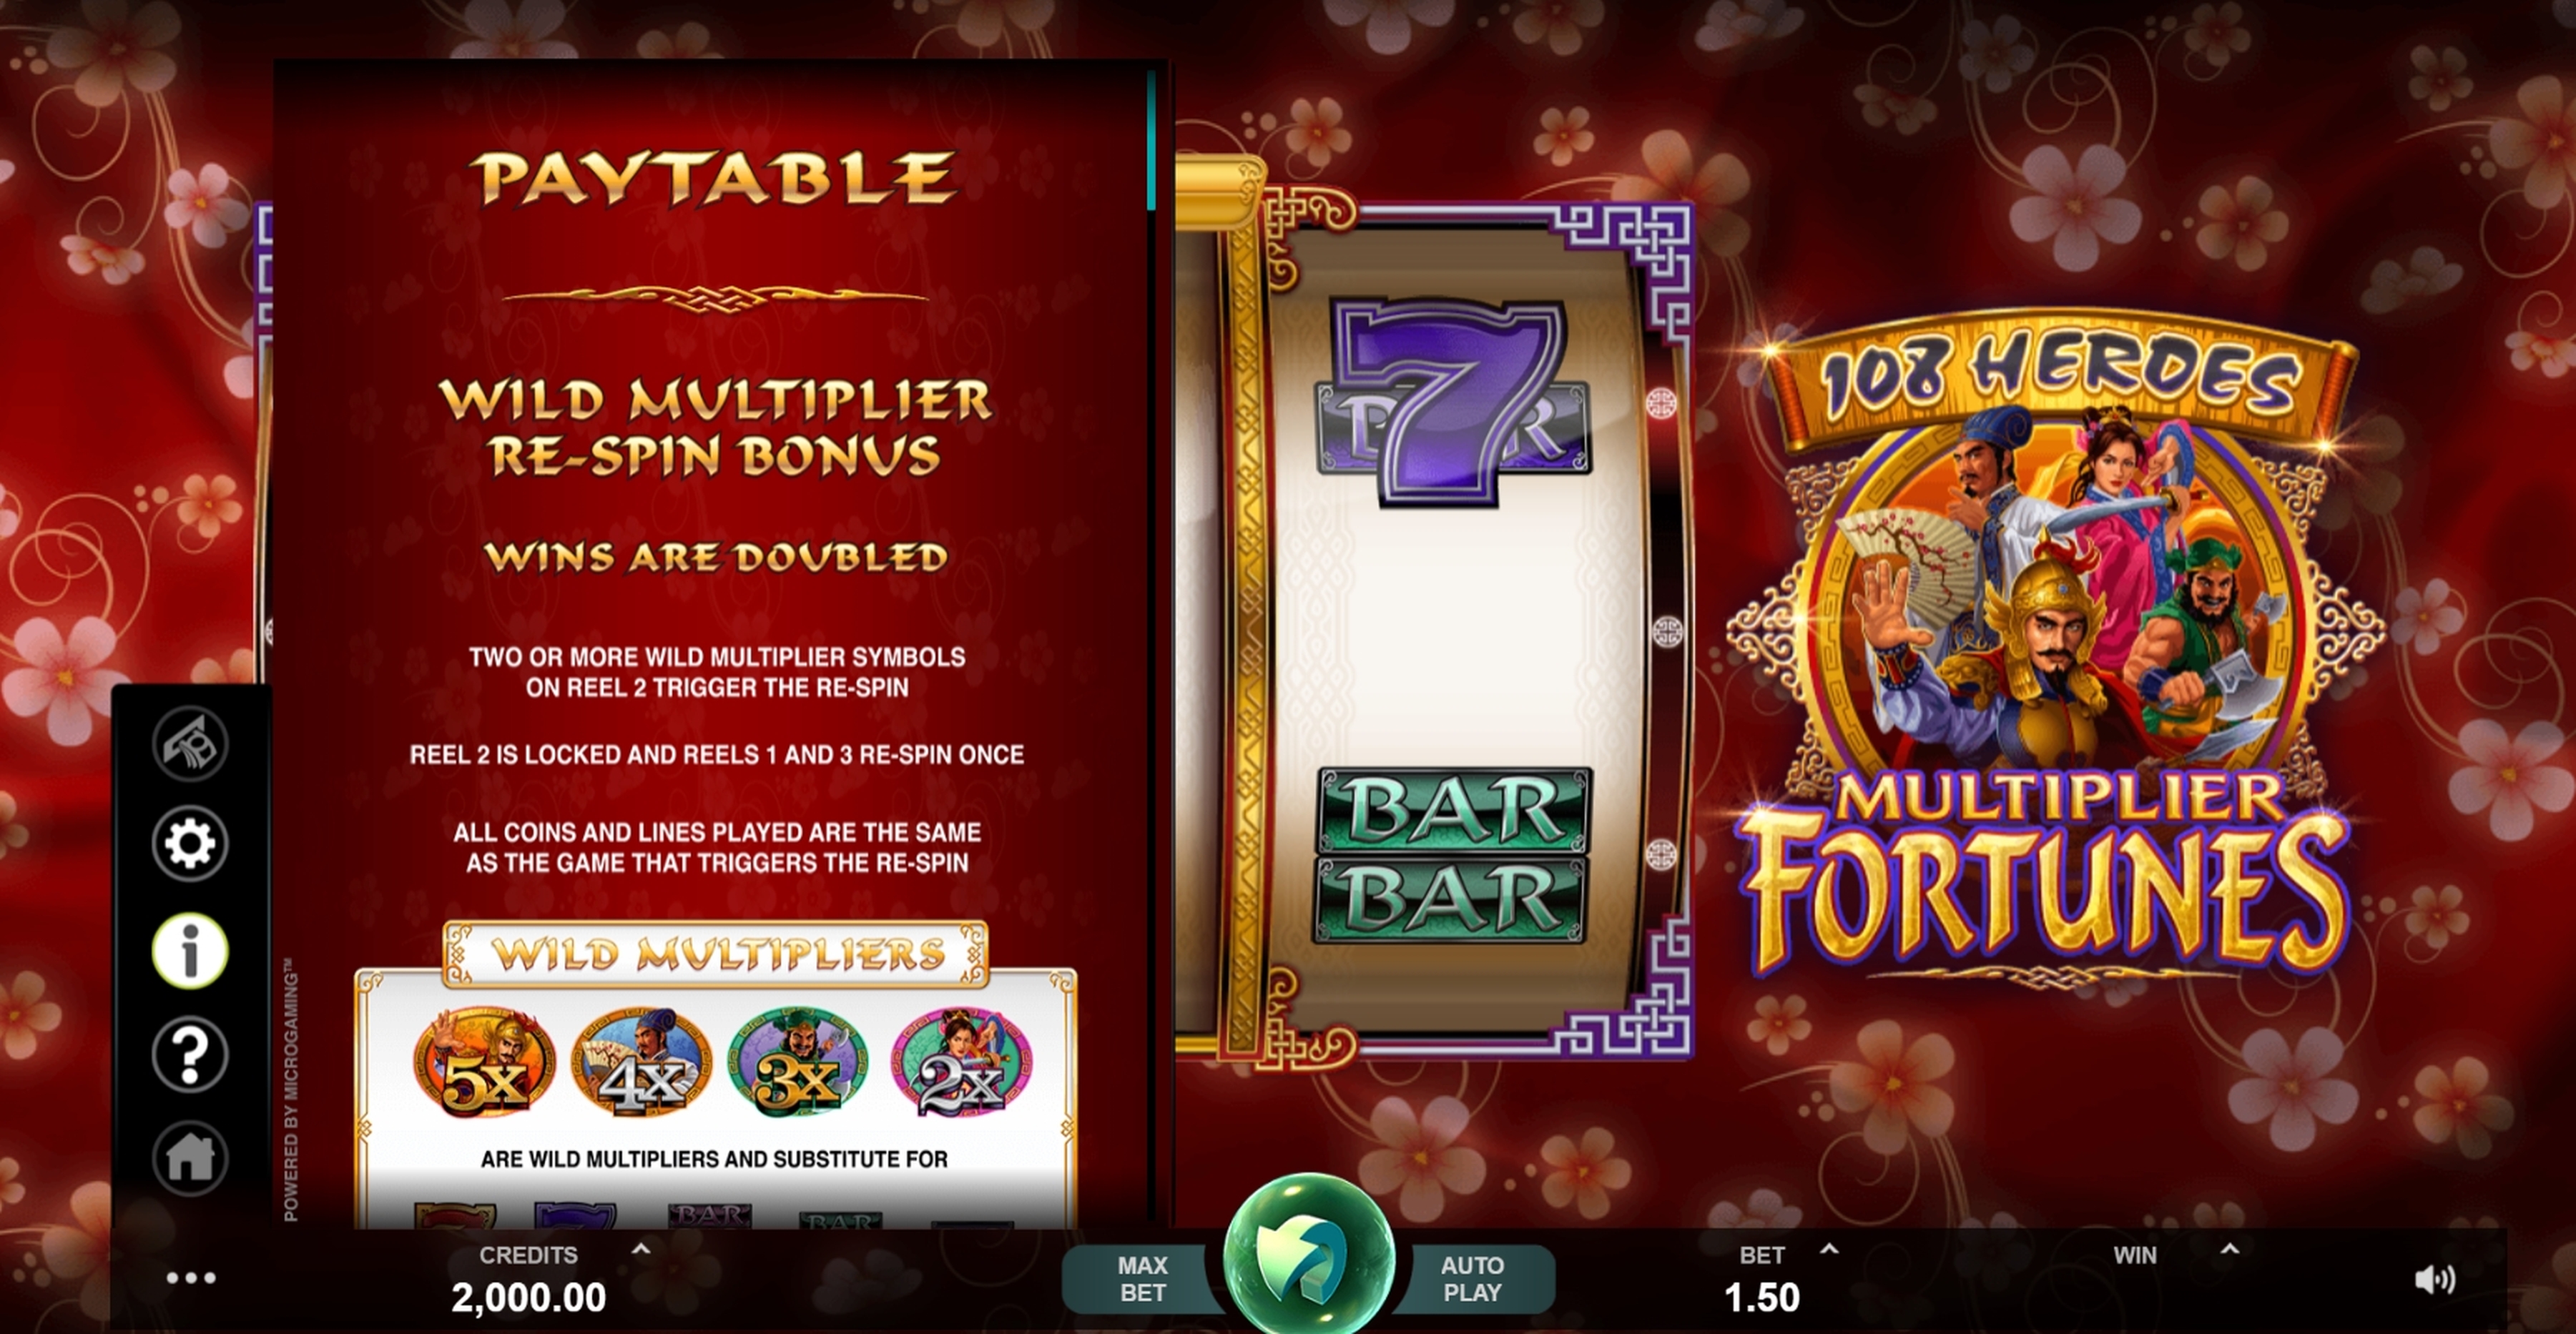 Info of 108 Heroes Multiplier Fortunes Slot Game by Triple Edge Studios